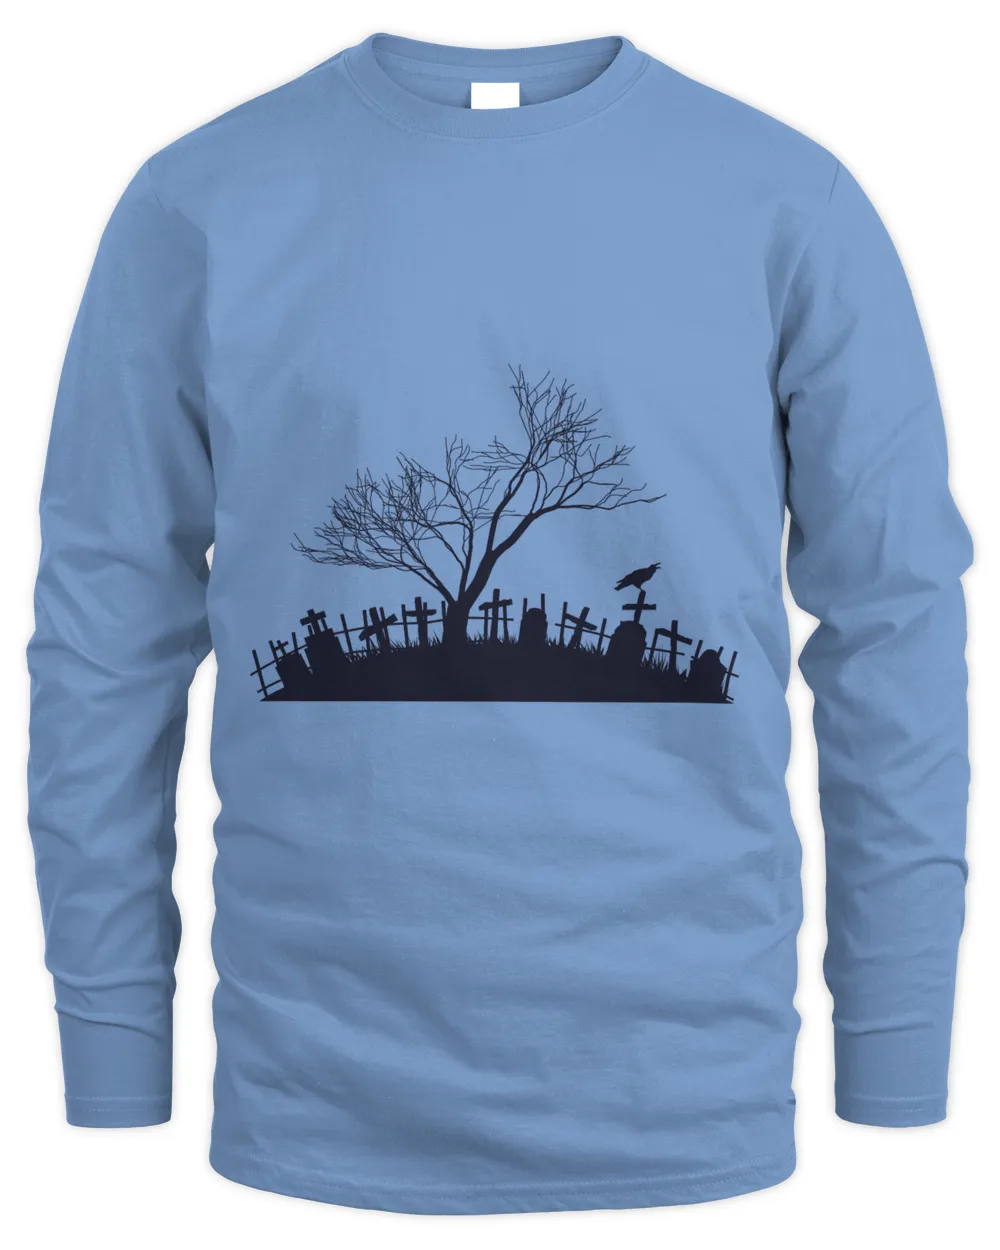 Spooky Cemetery t shirt hoodie sweater